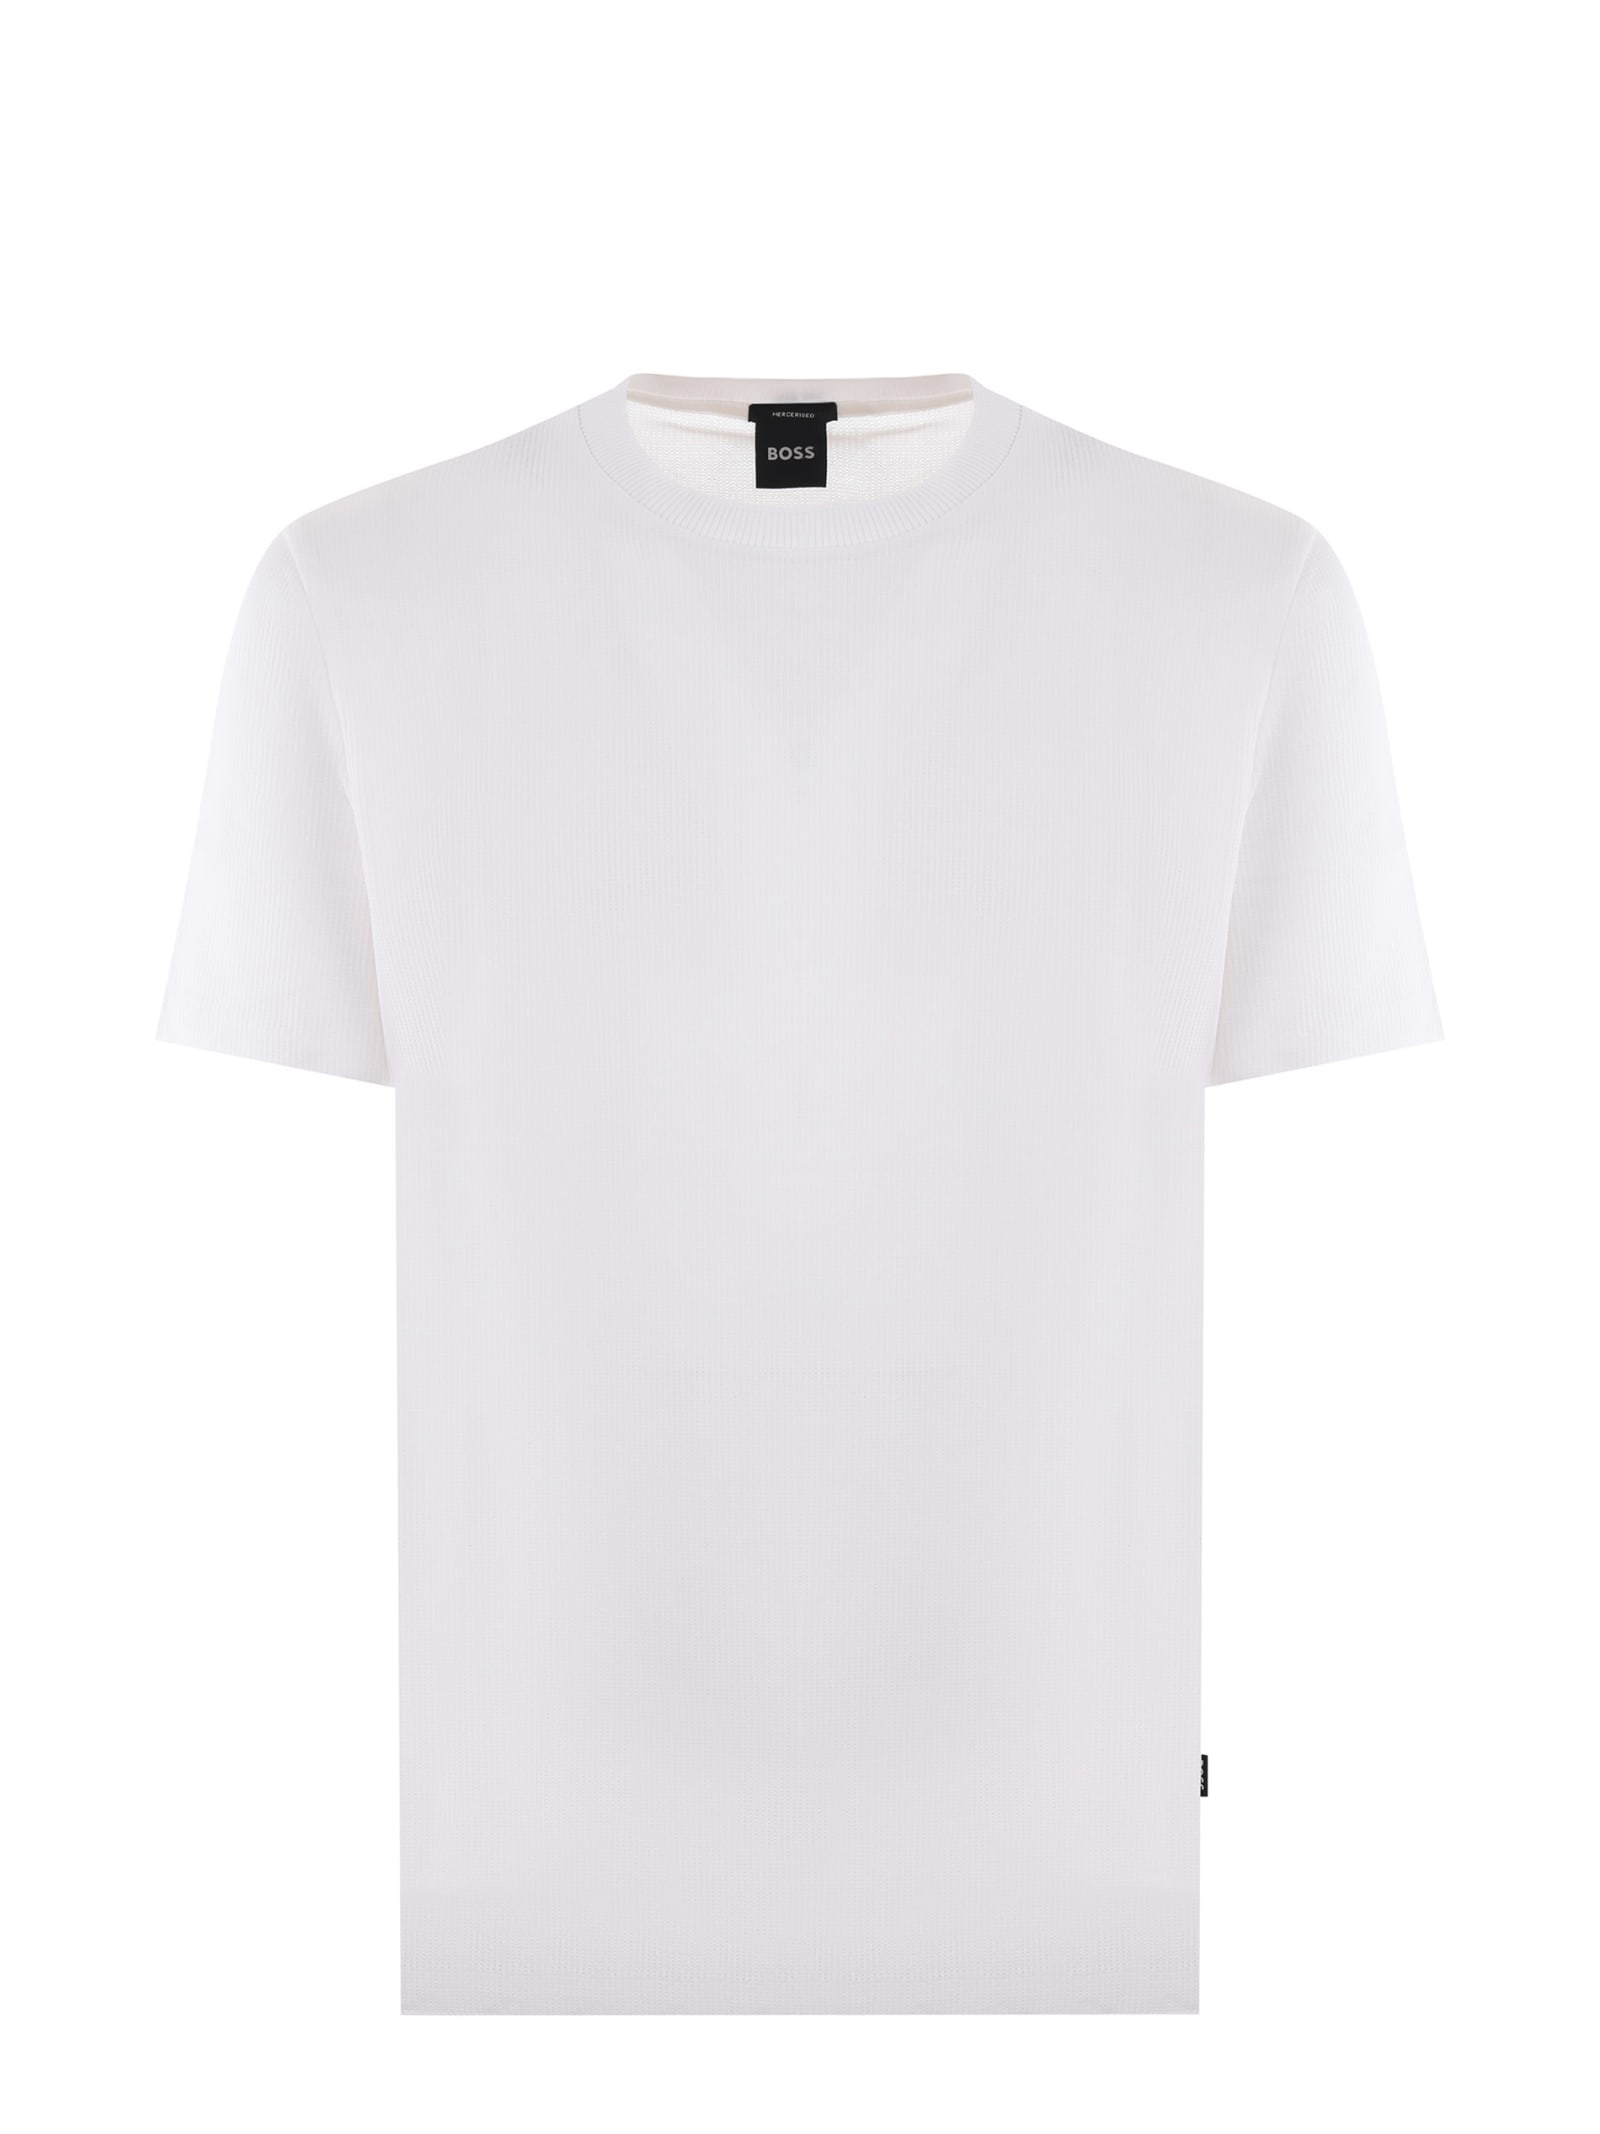 Hugo Boss Boss T-shirt In Bianco